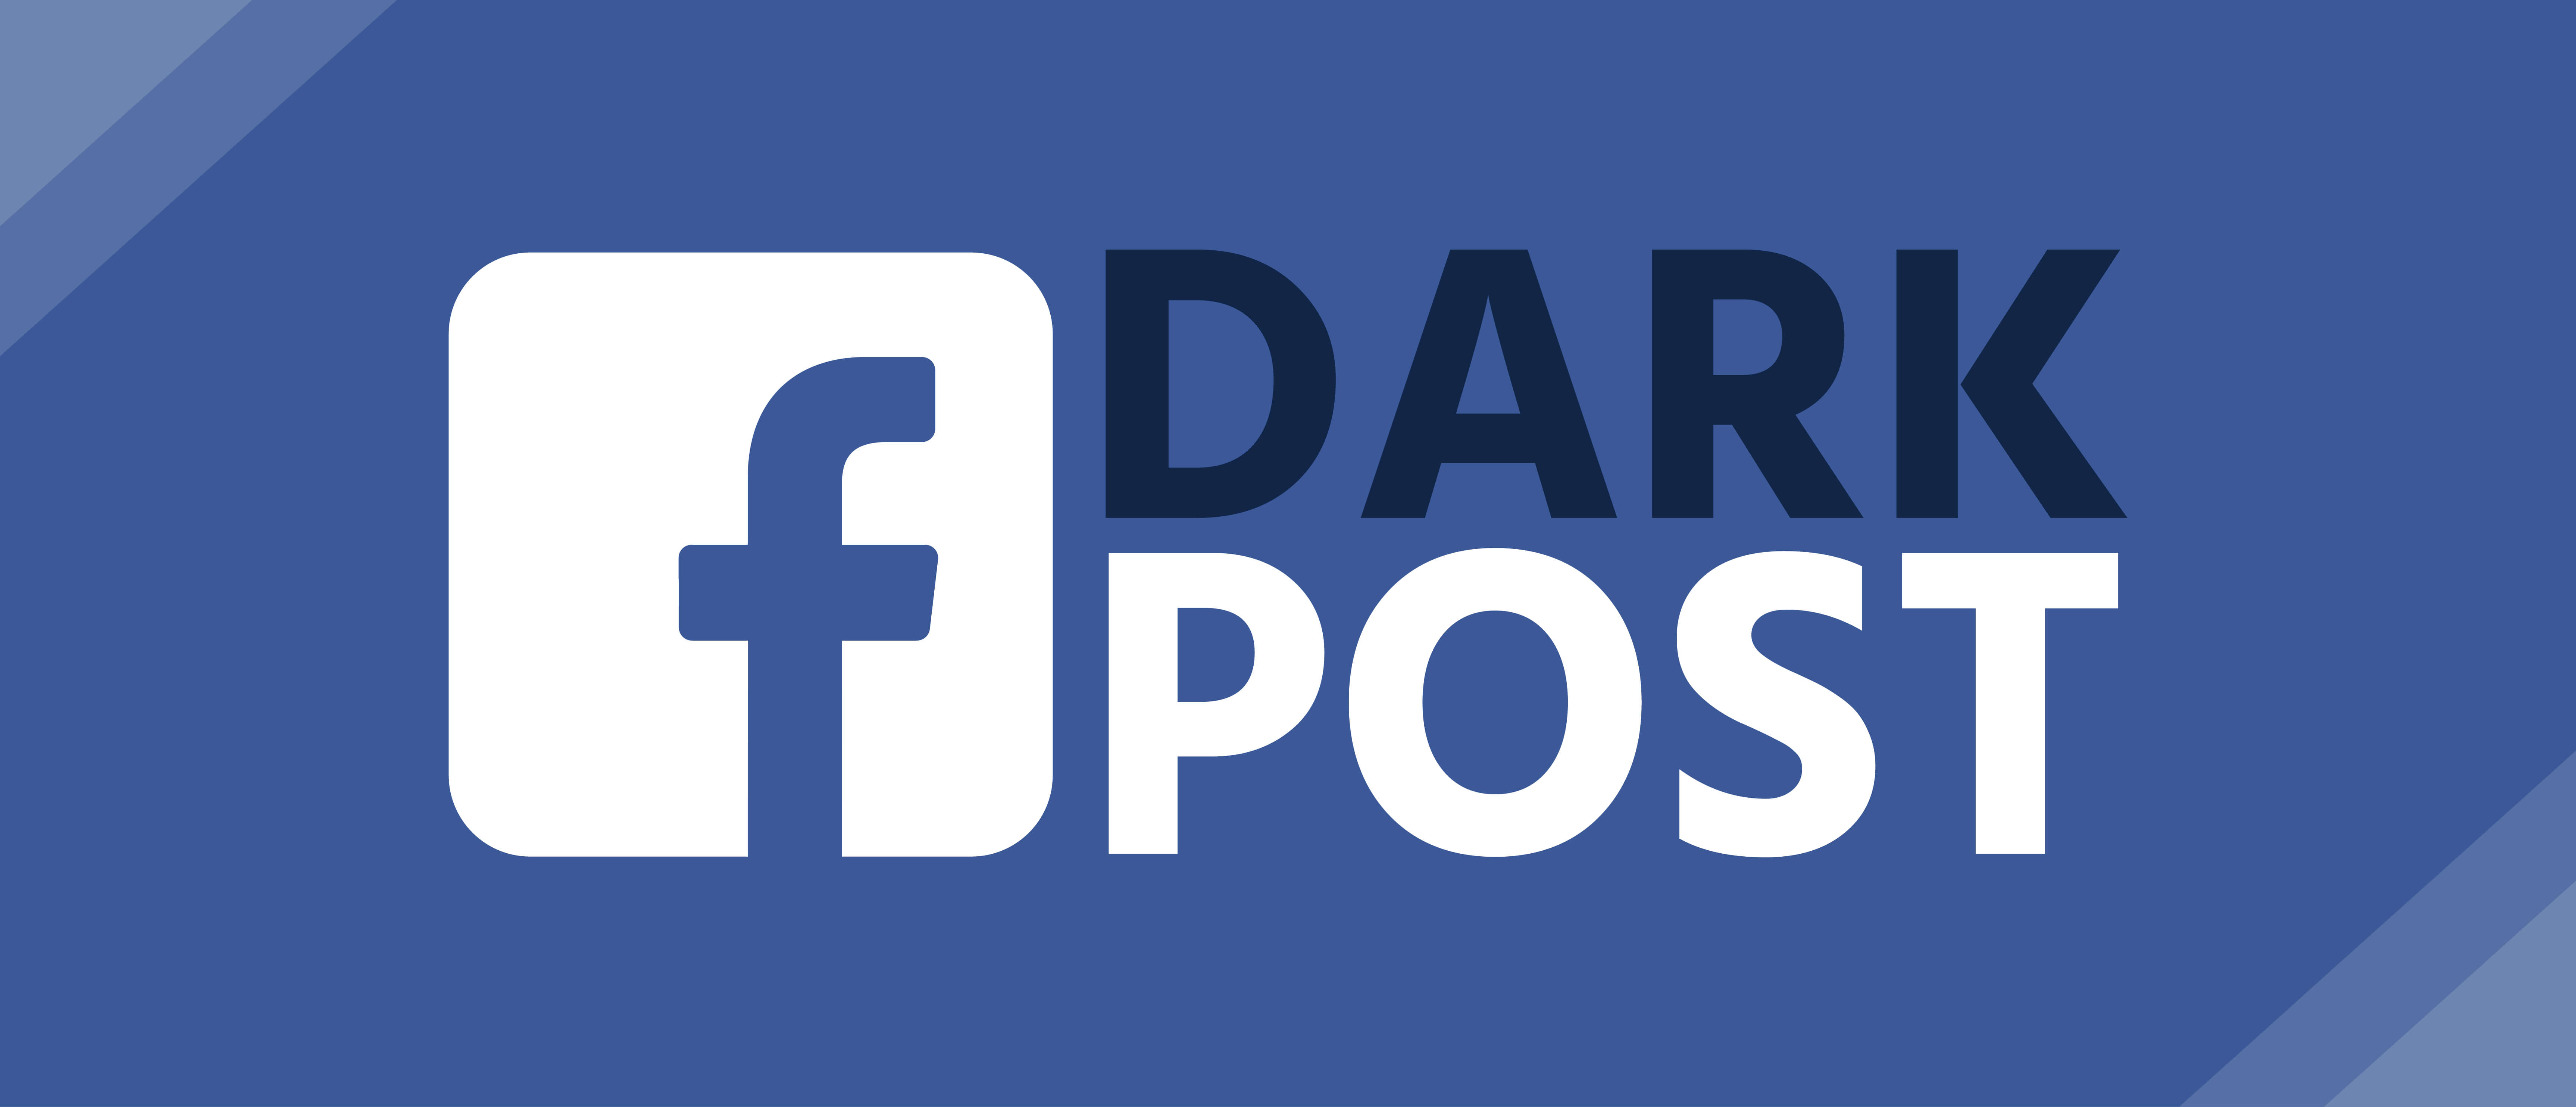 Dark post